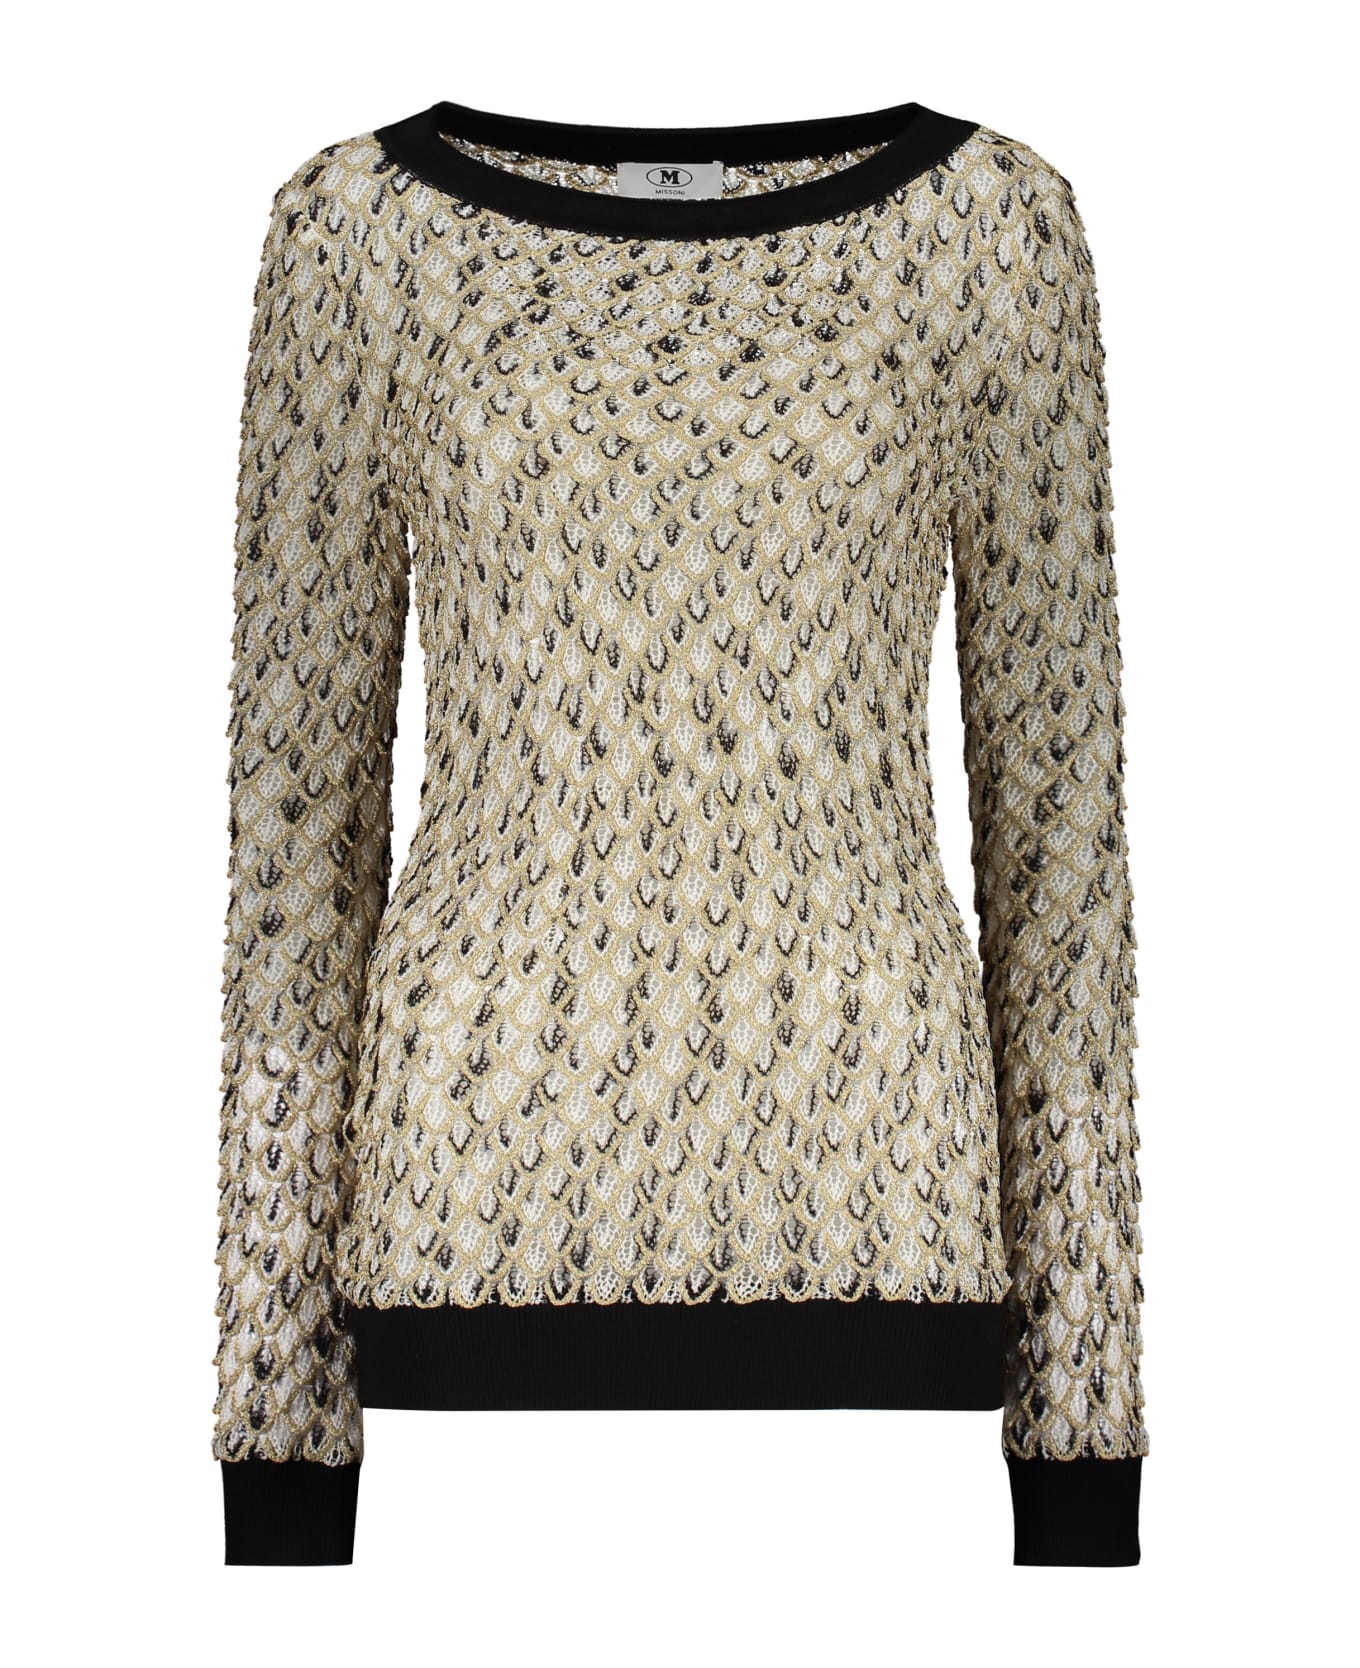 M Missoni Long Sleeve Sweater - Multicolor ニットウェア